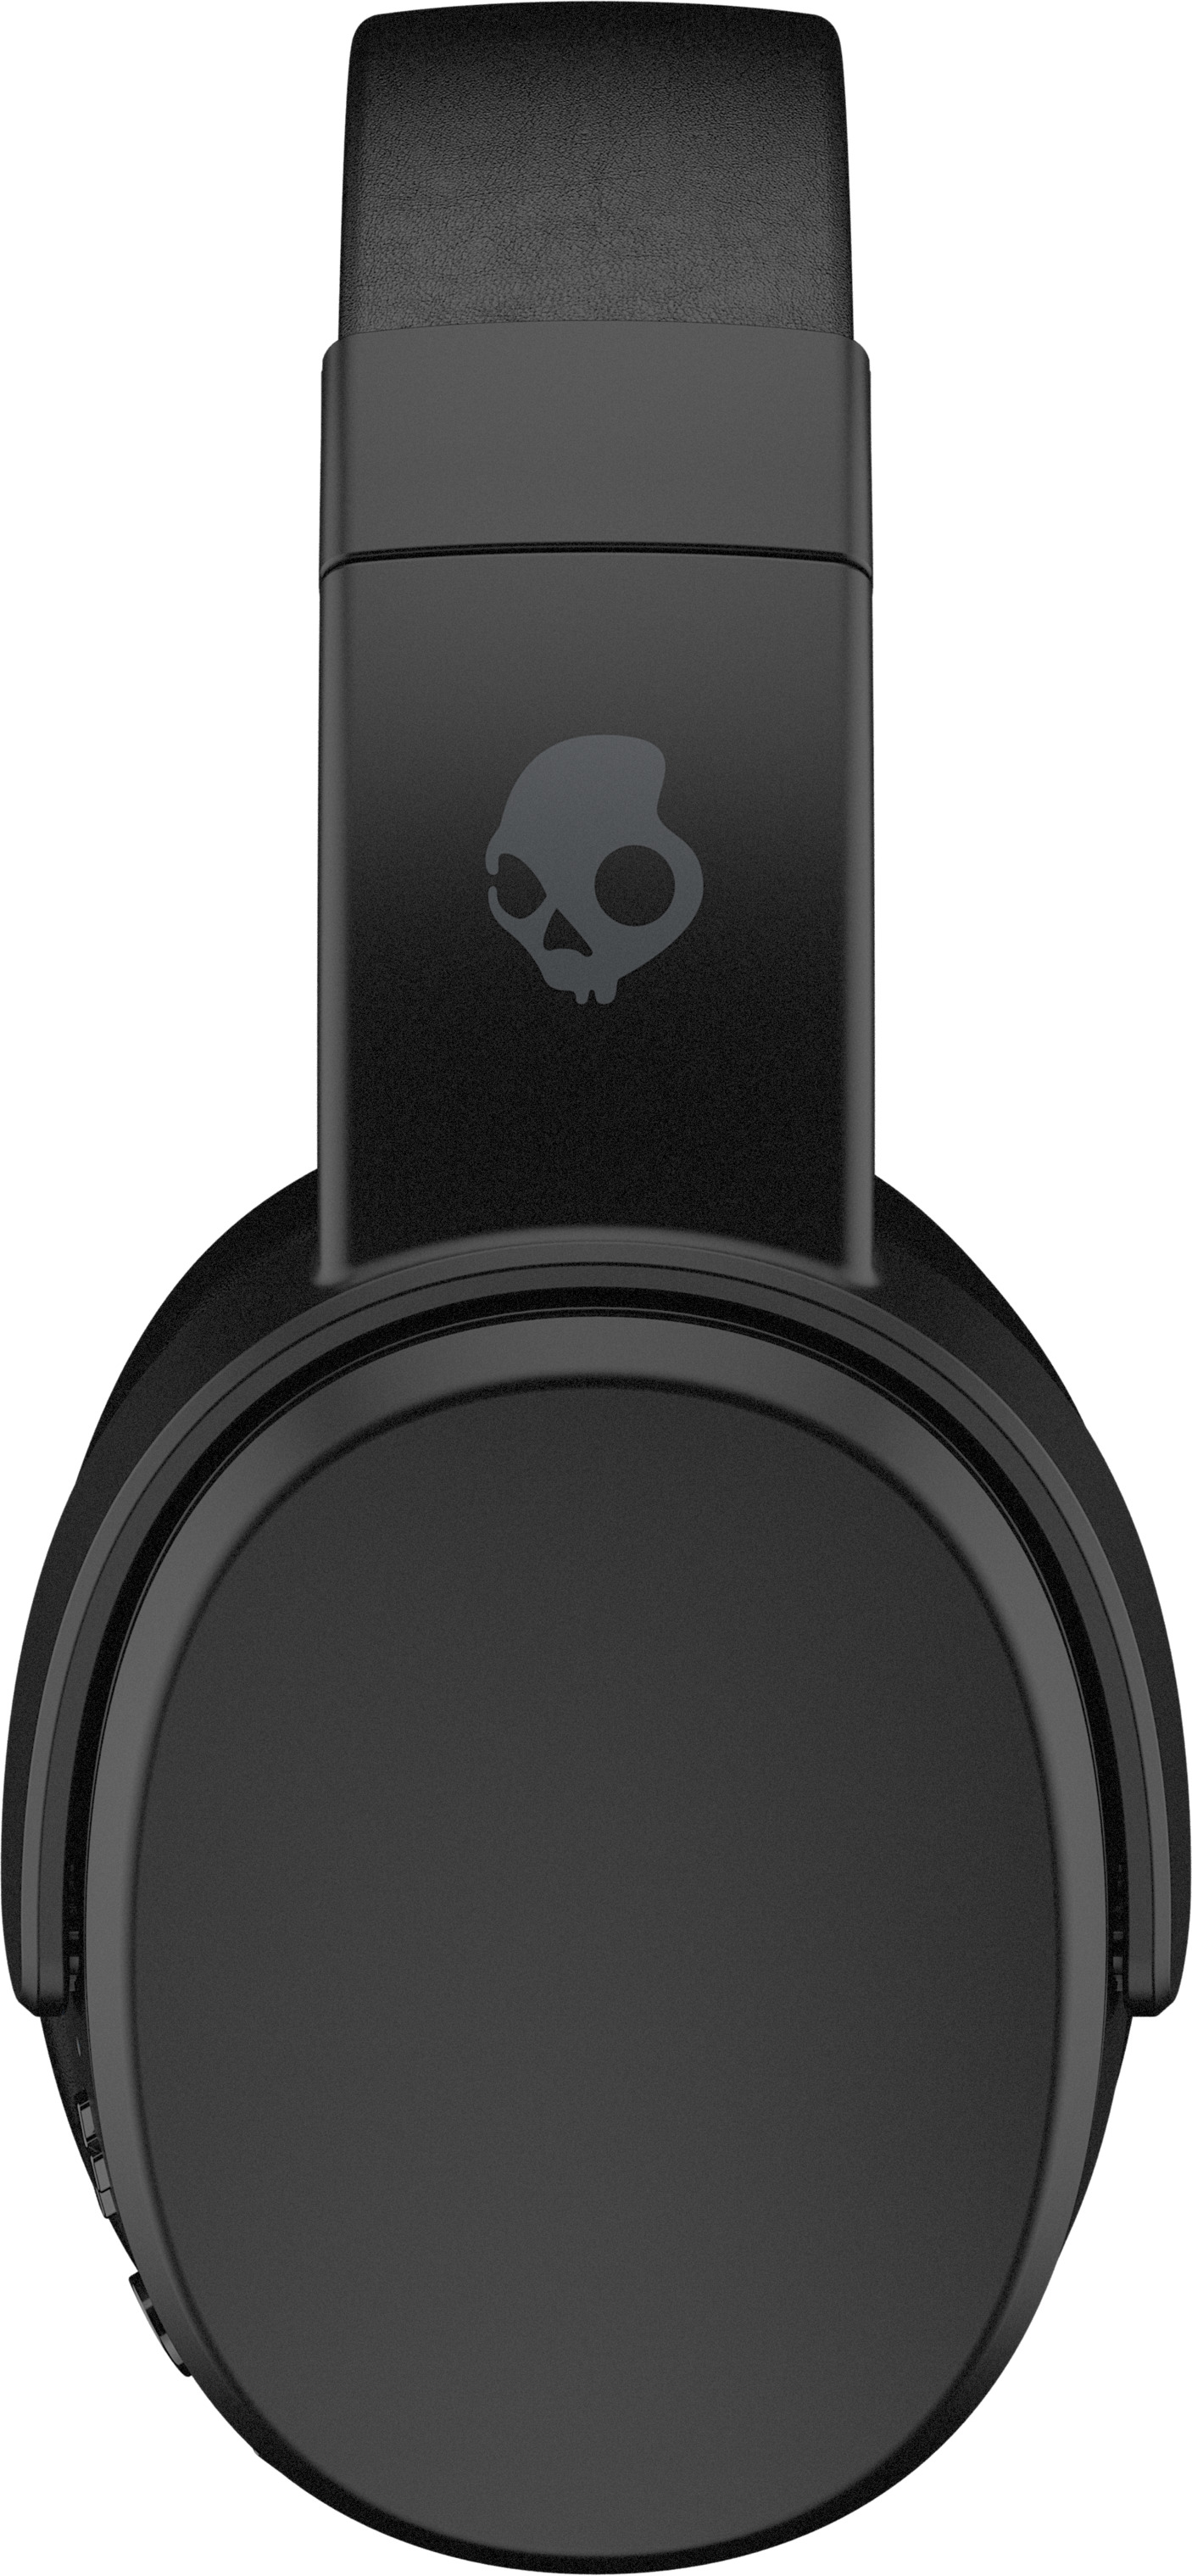 SKULLCANDY Crusher Wireless, Schwarz Bluetooth Over-ear Kopfhörer